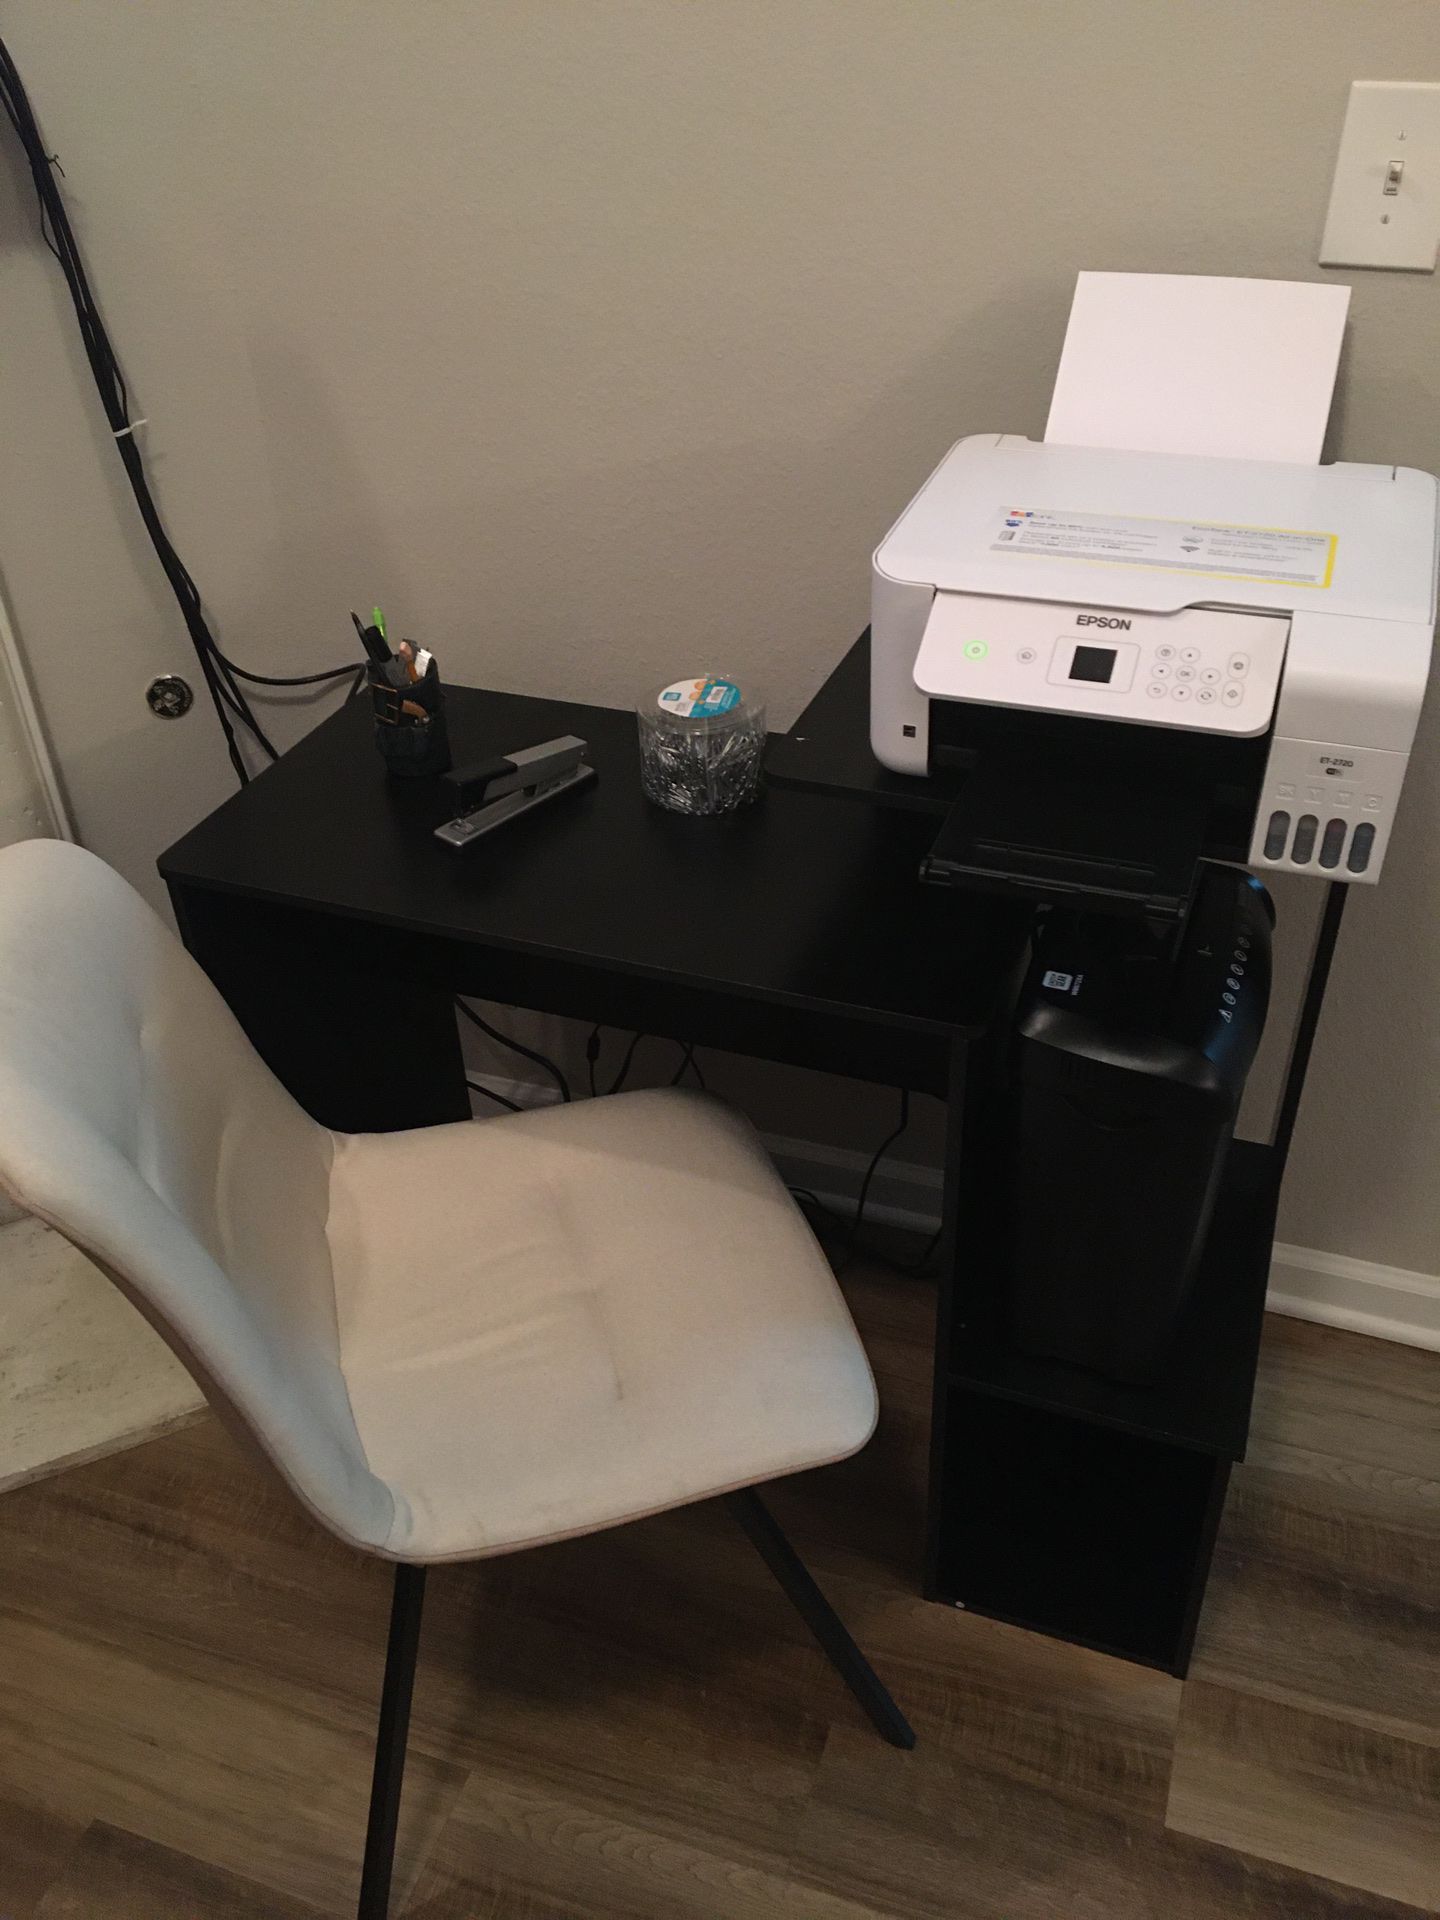 Printer, desk, chair, paper triturator